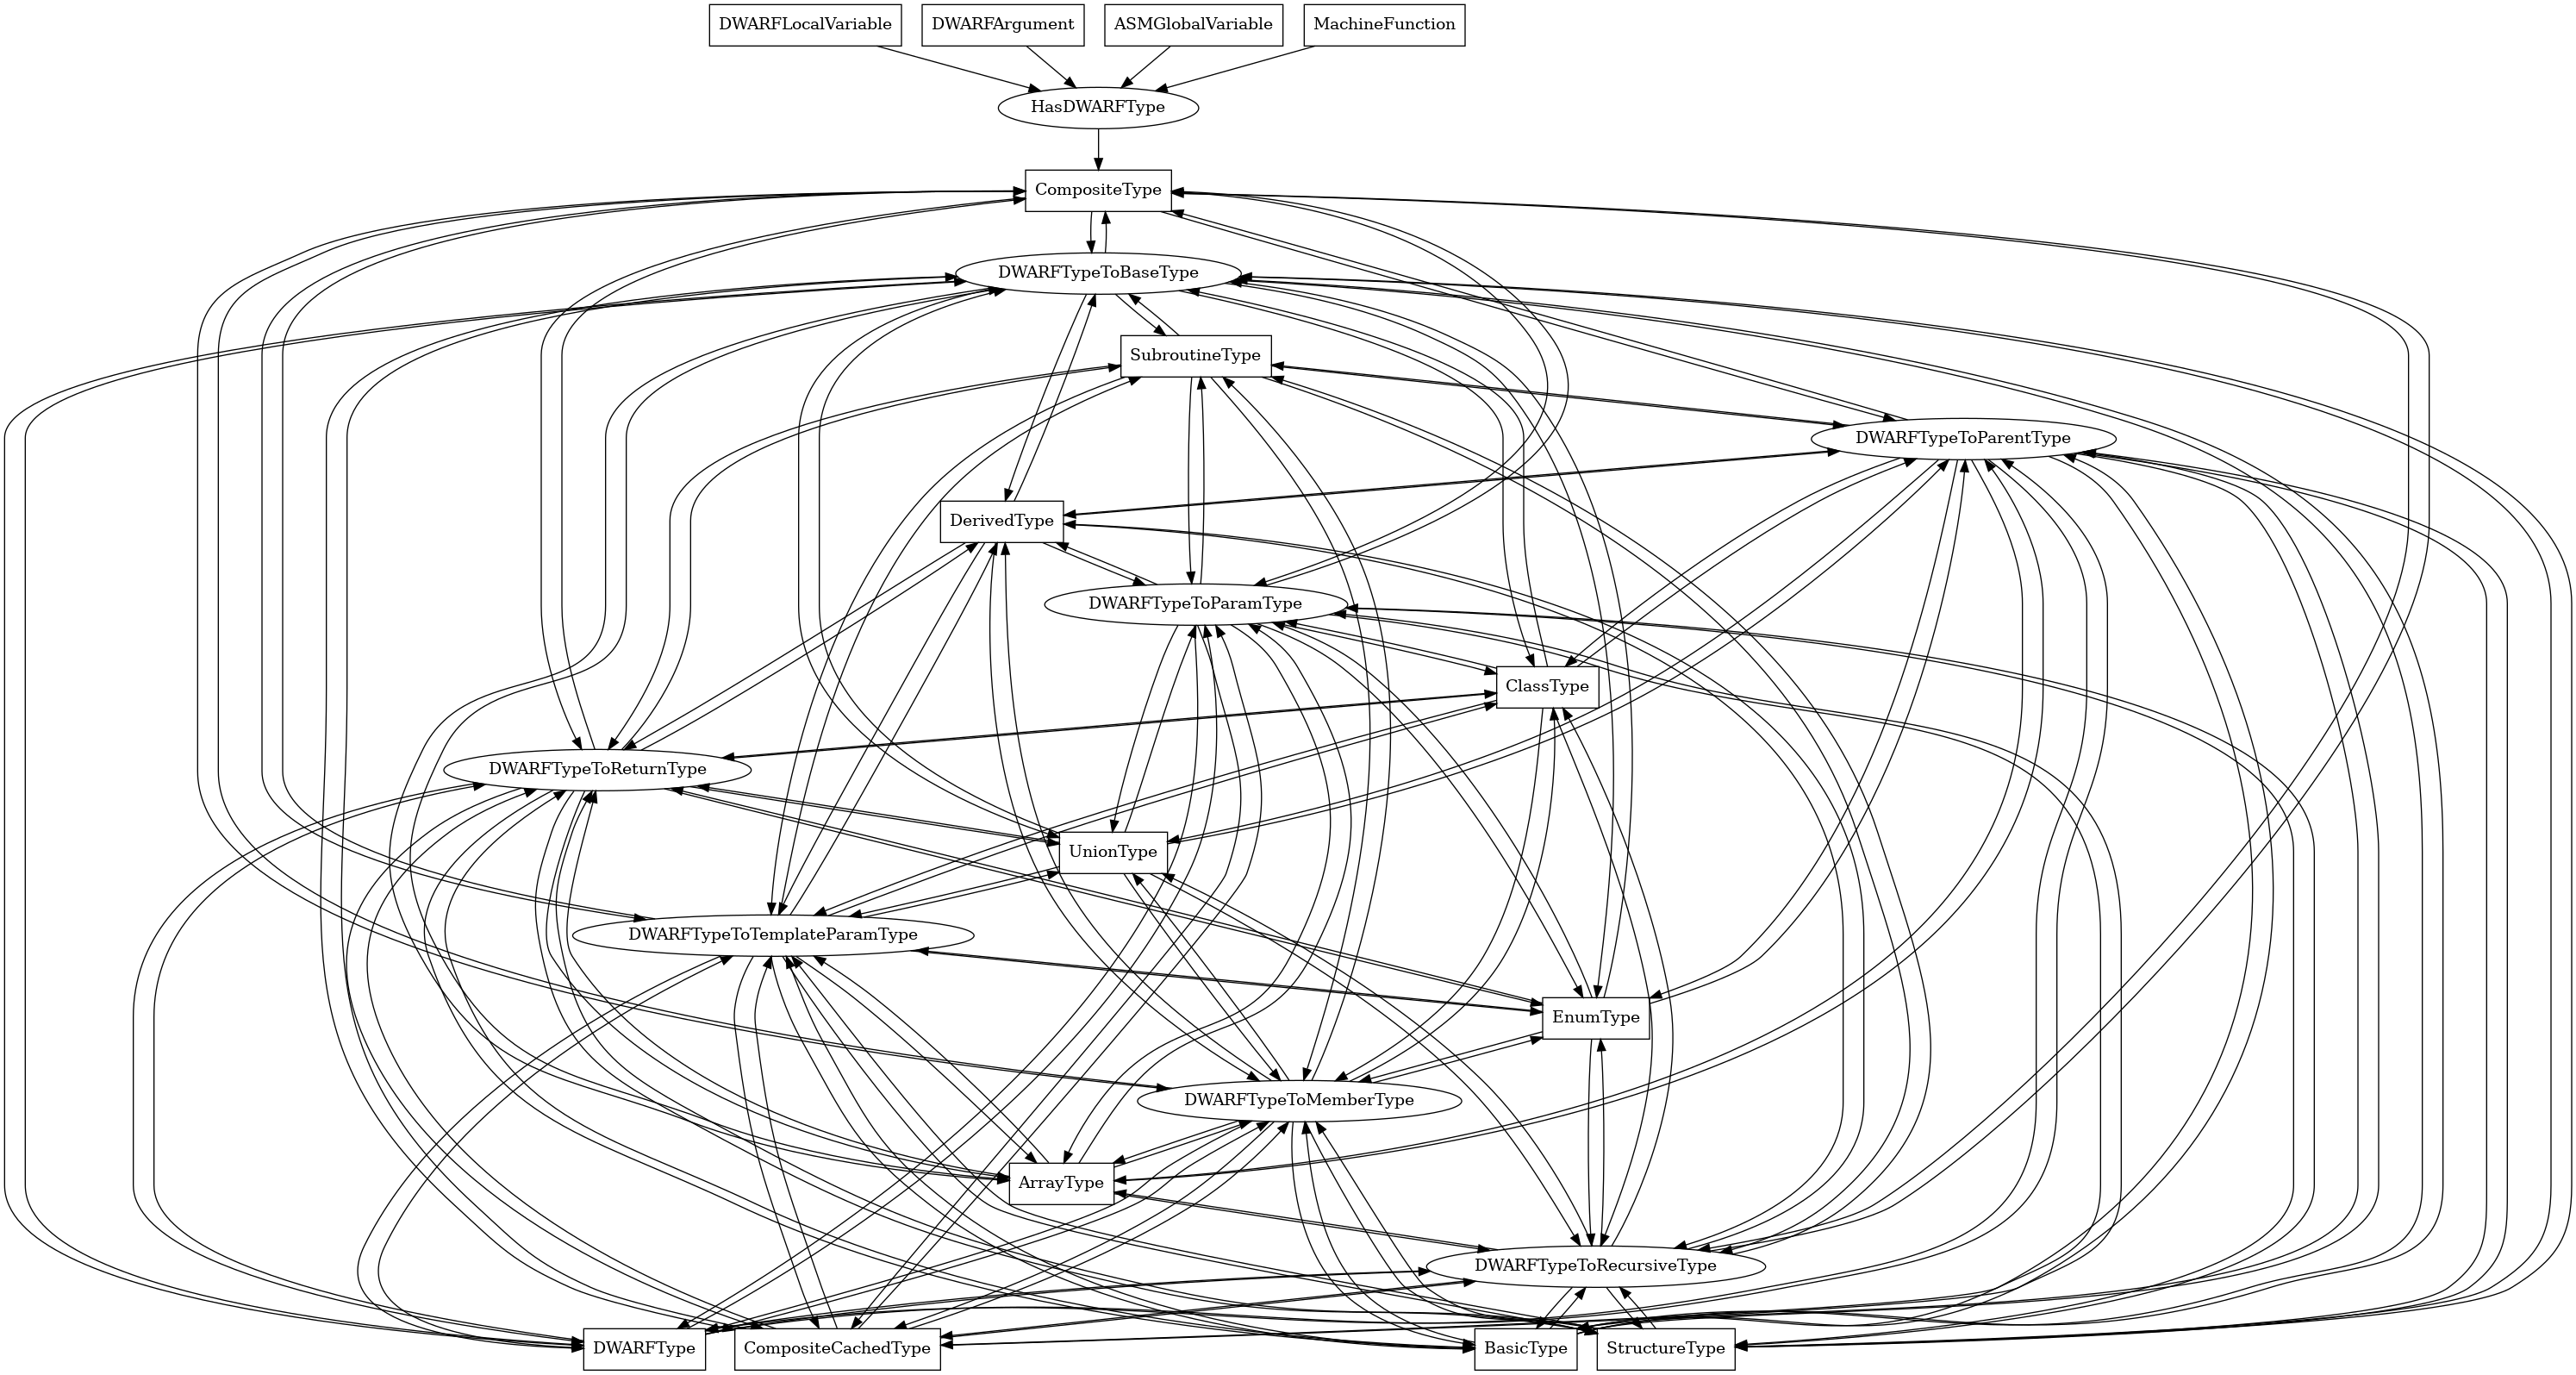 Entity-relationship diagram for CompositeType nodes